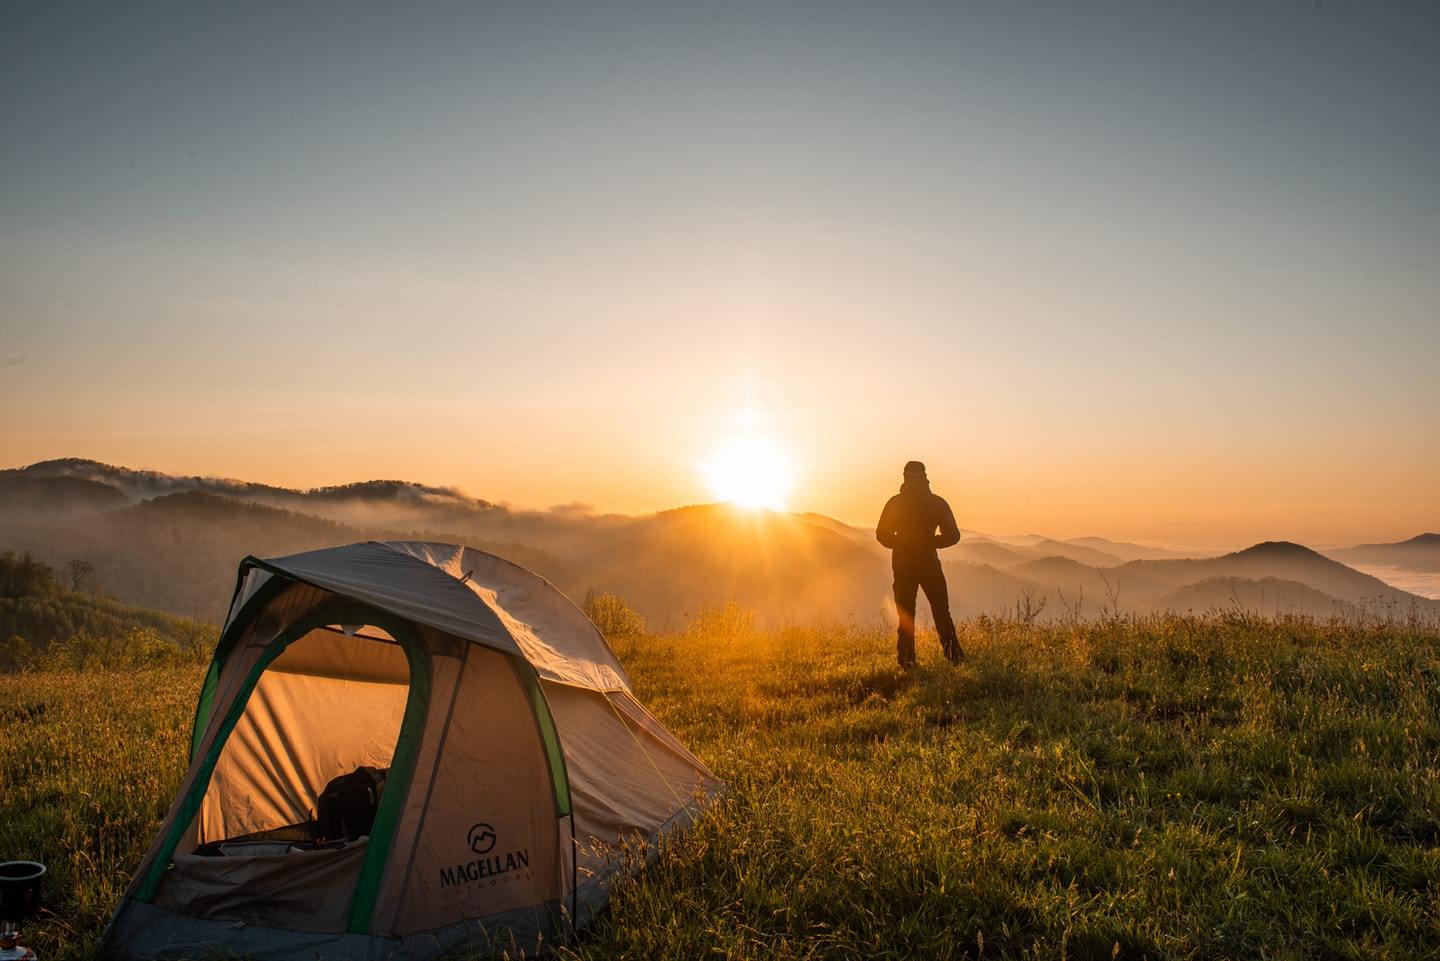 sunrise while camping